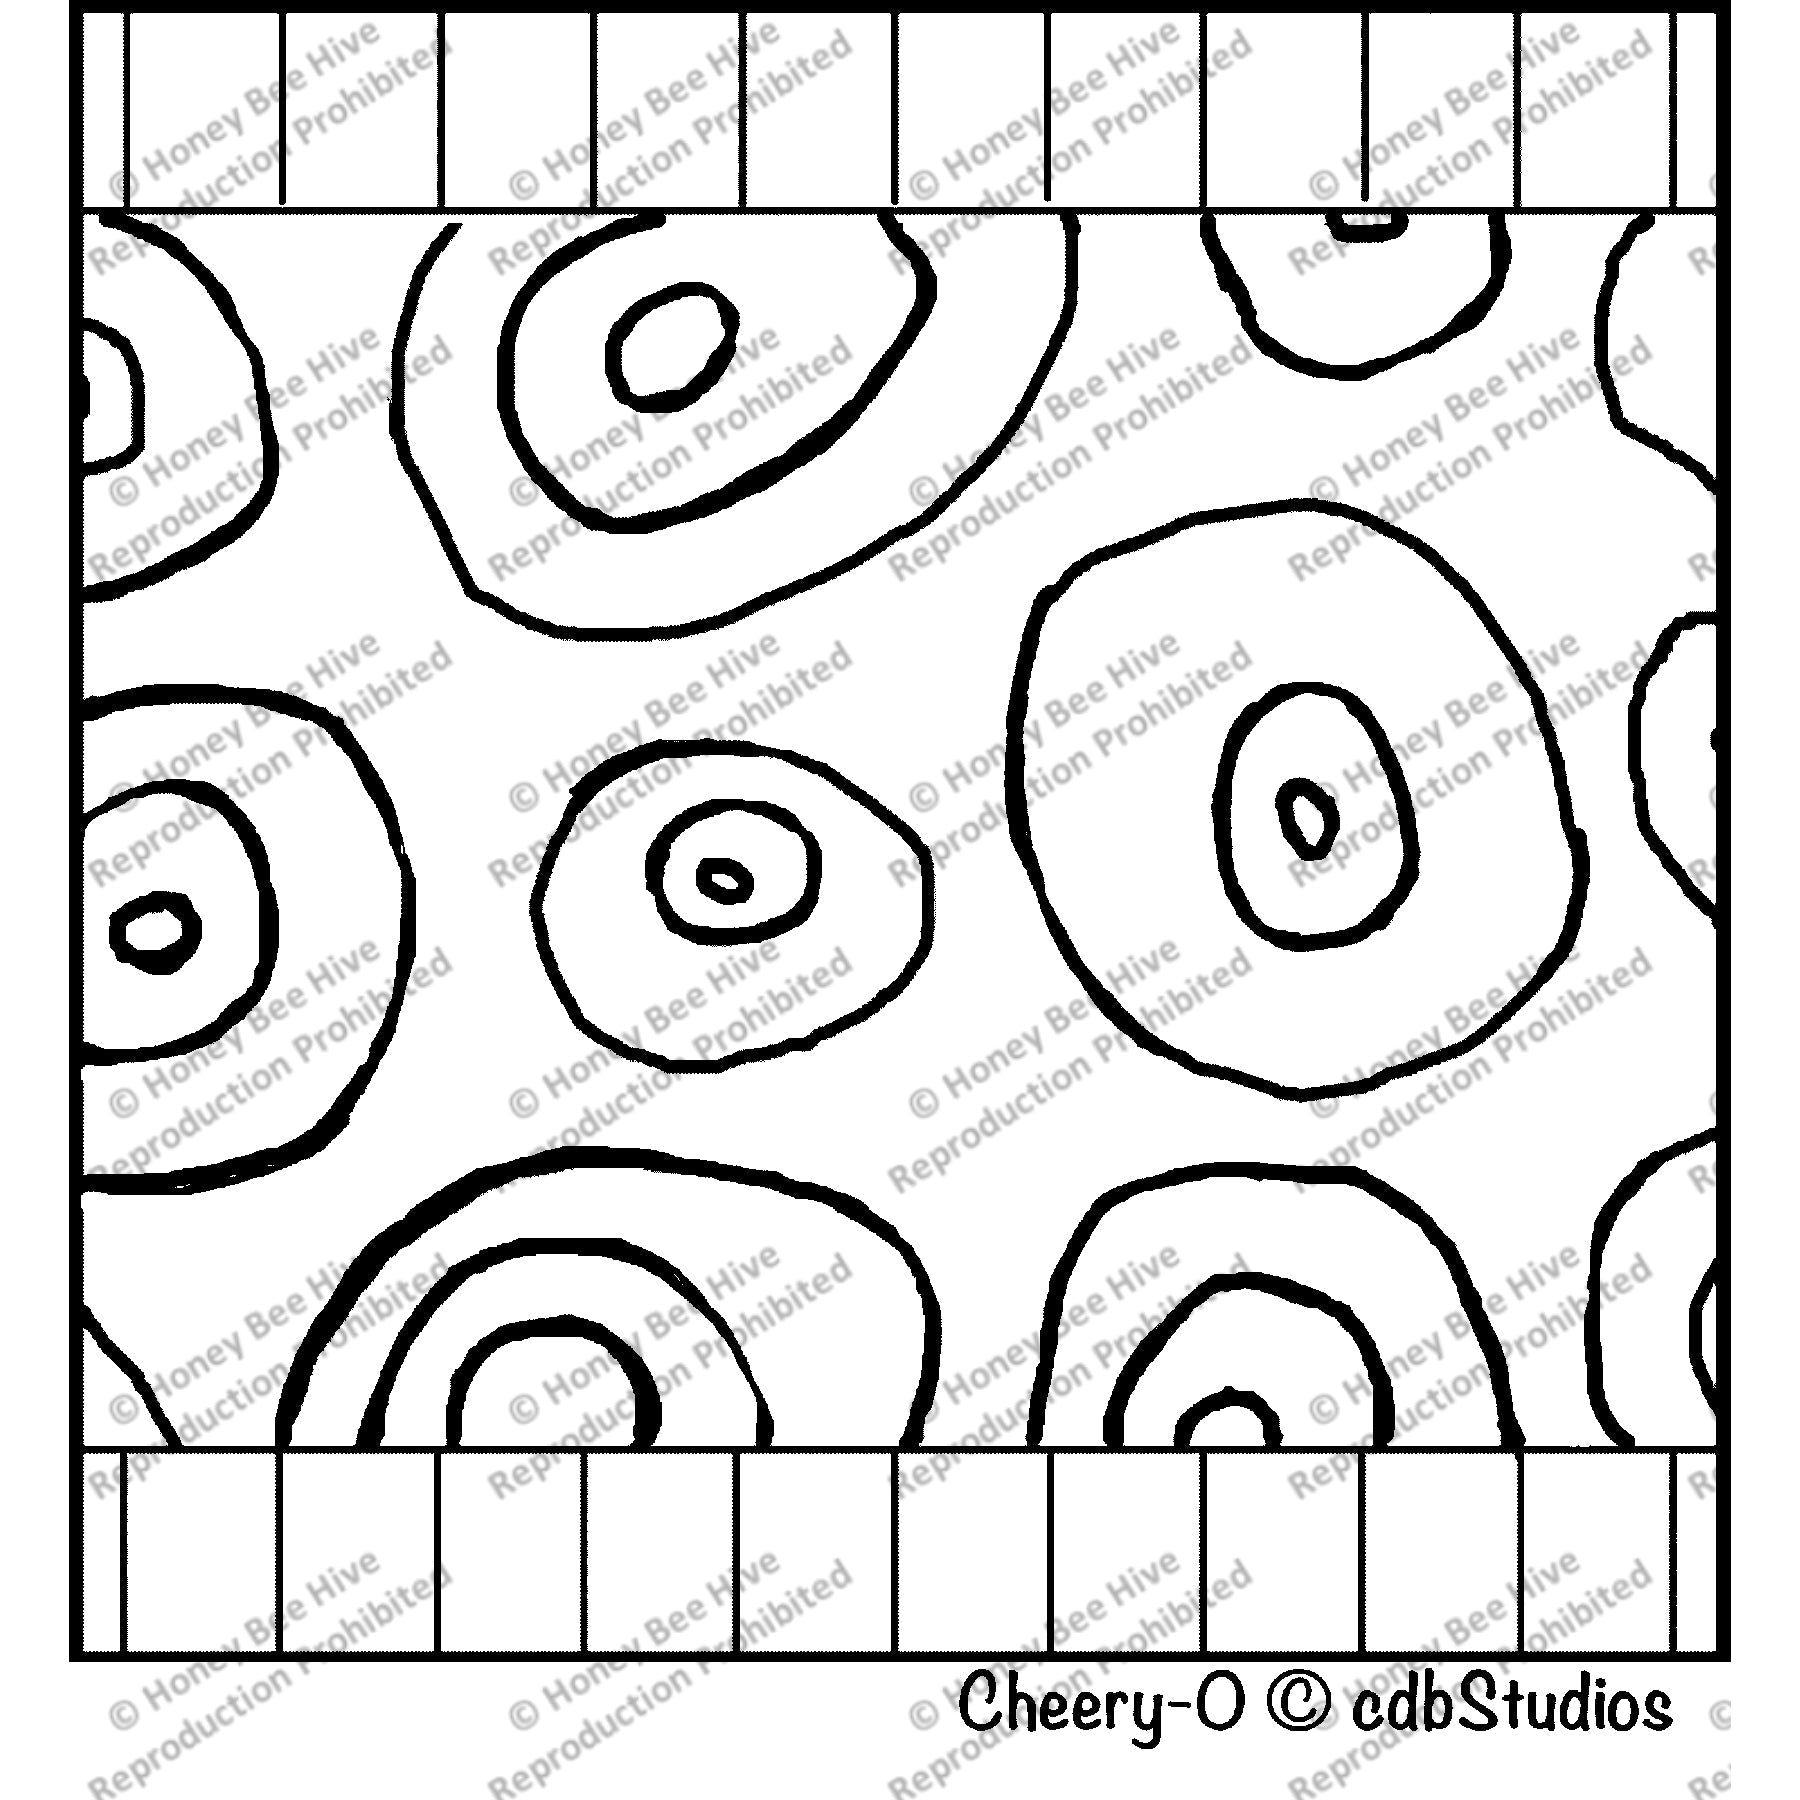 Cheery-O, rug hooking pattern